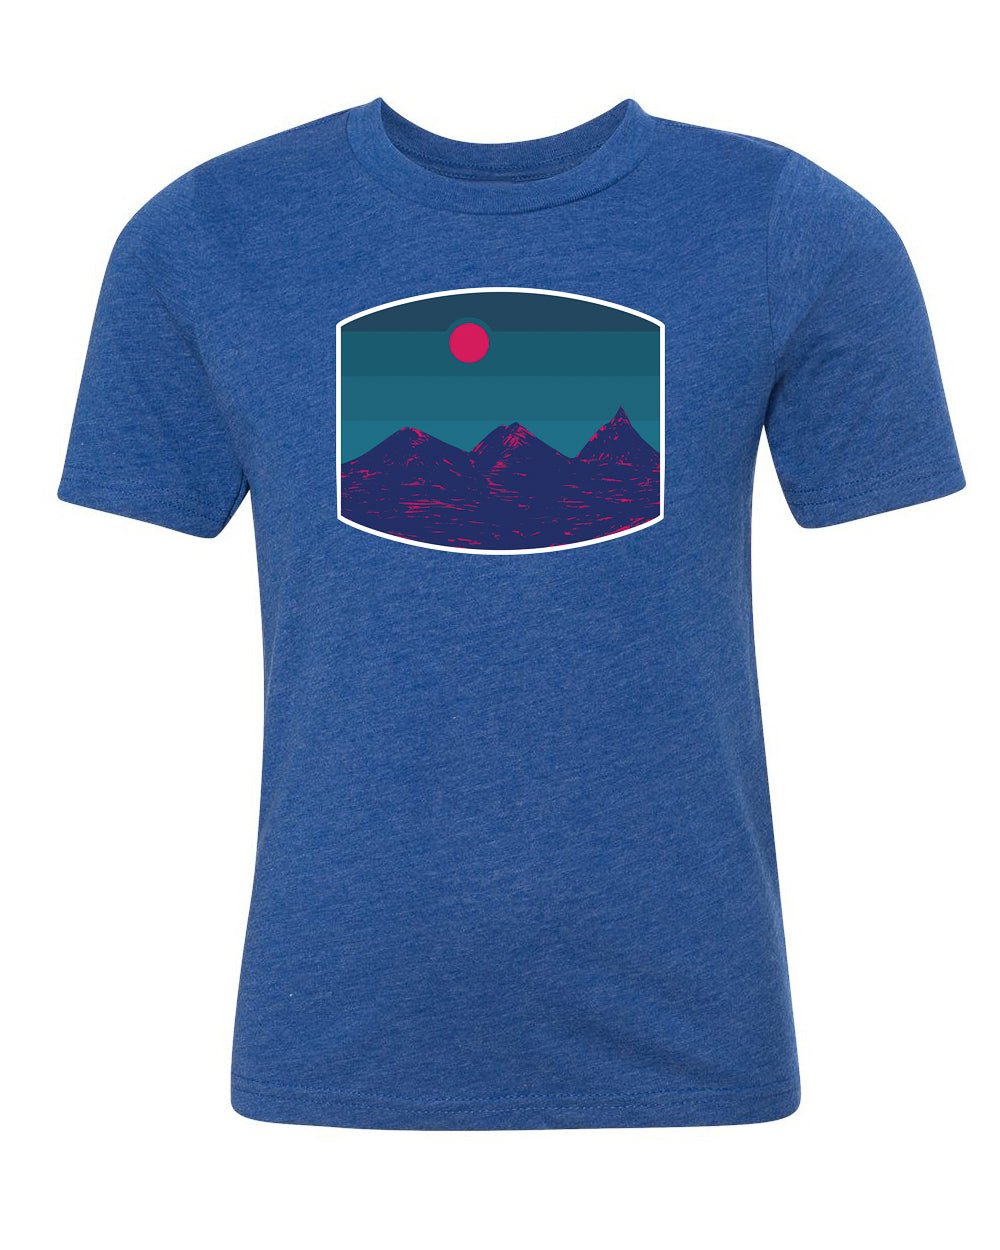 Sunrise Over Mountains Kids T Shirts - Mato & Hash